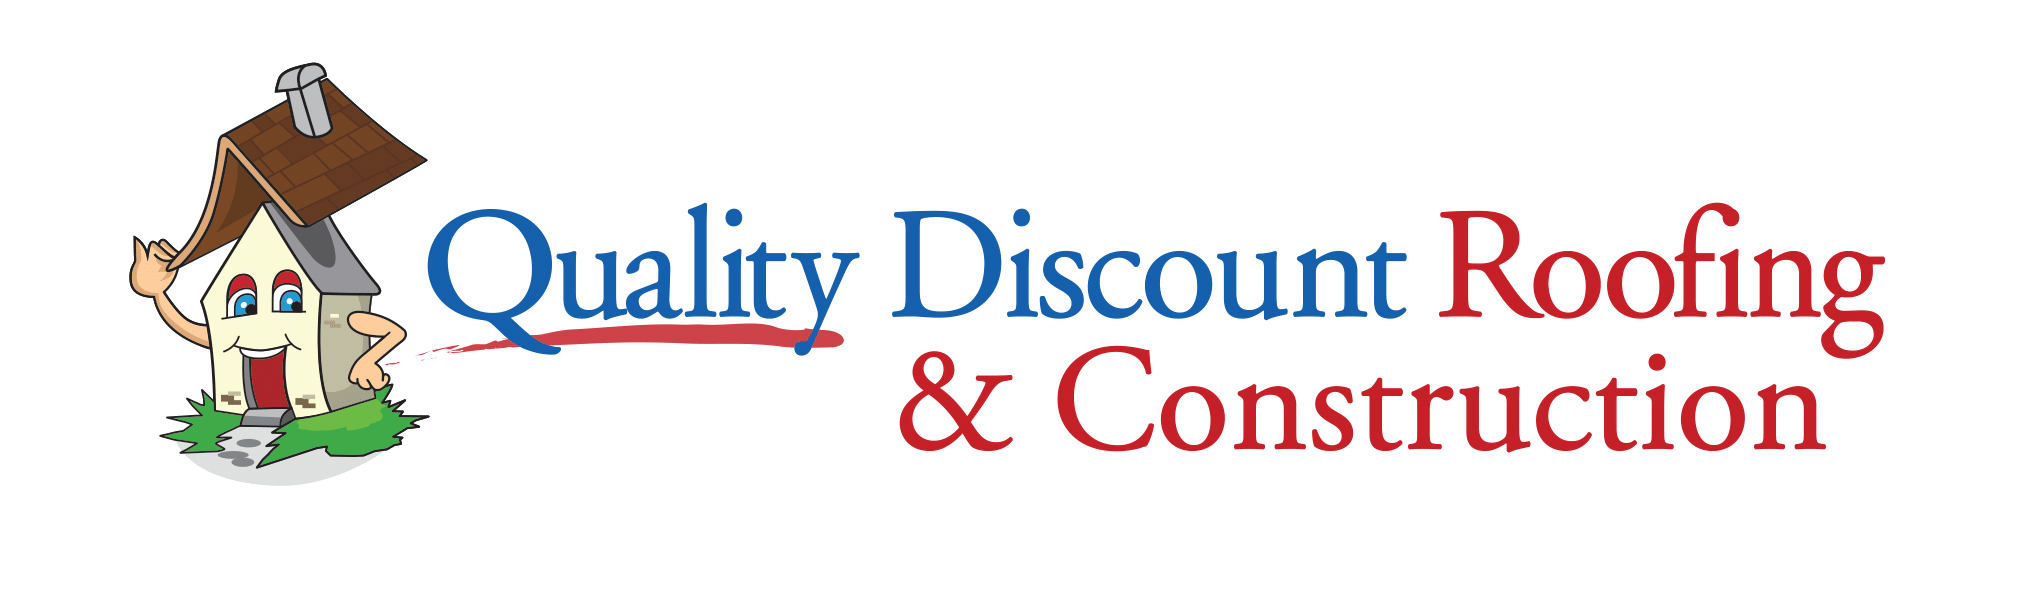 Quality Discount Roofing, LLC Logo